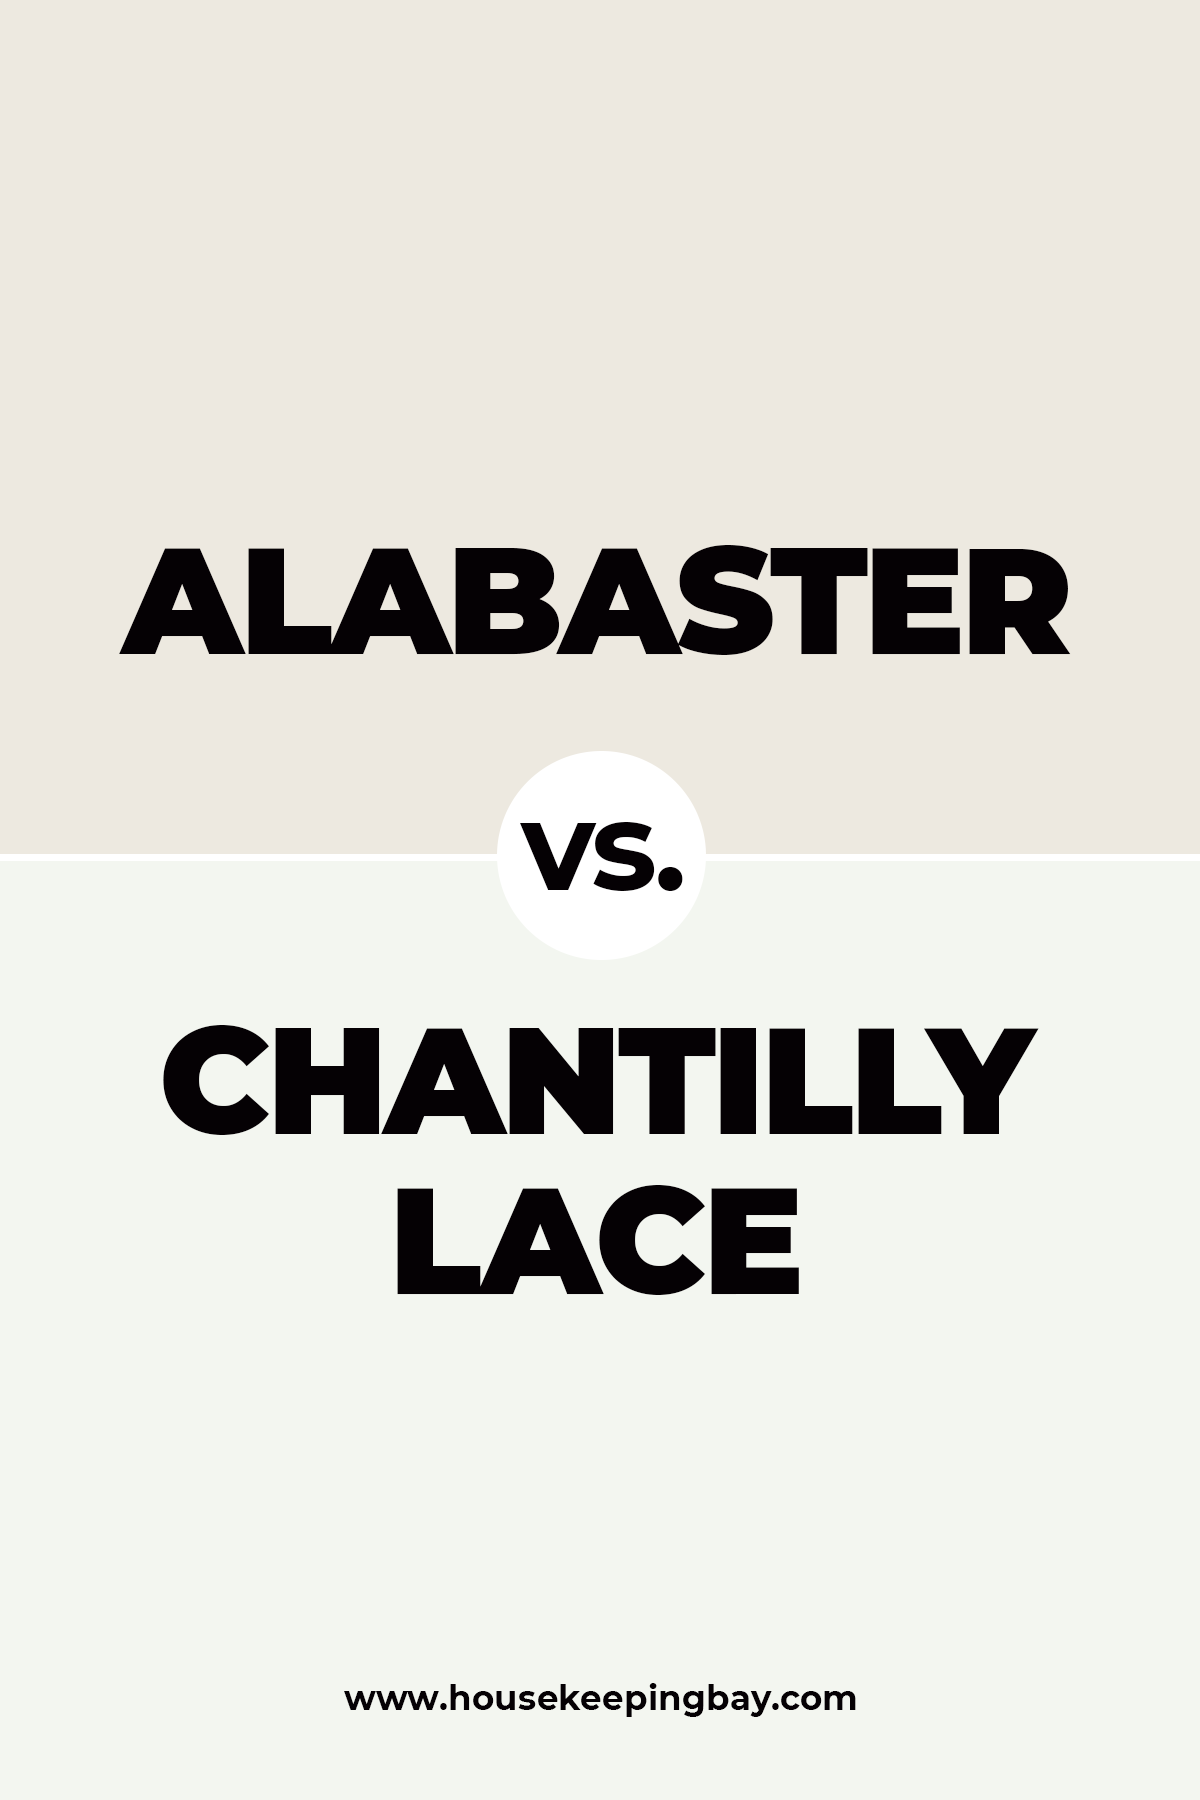 Alabaster vs. Chantilly lace